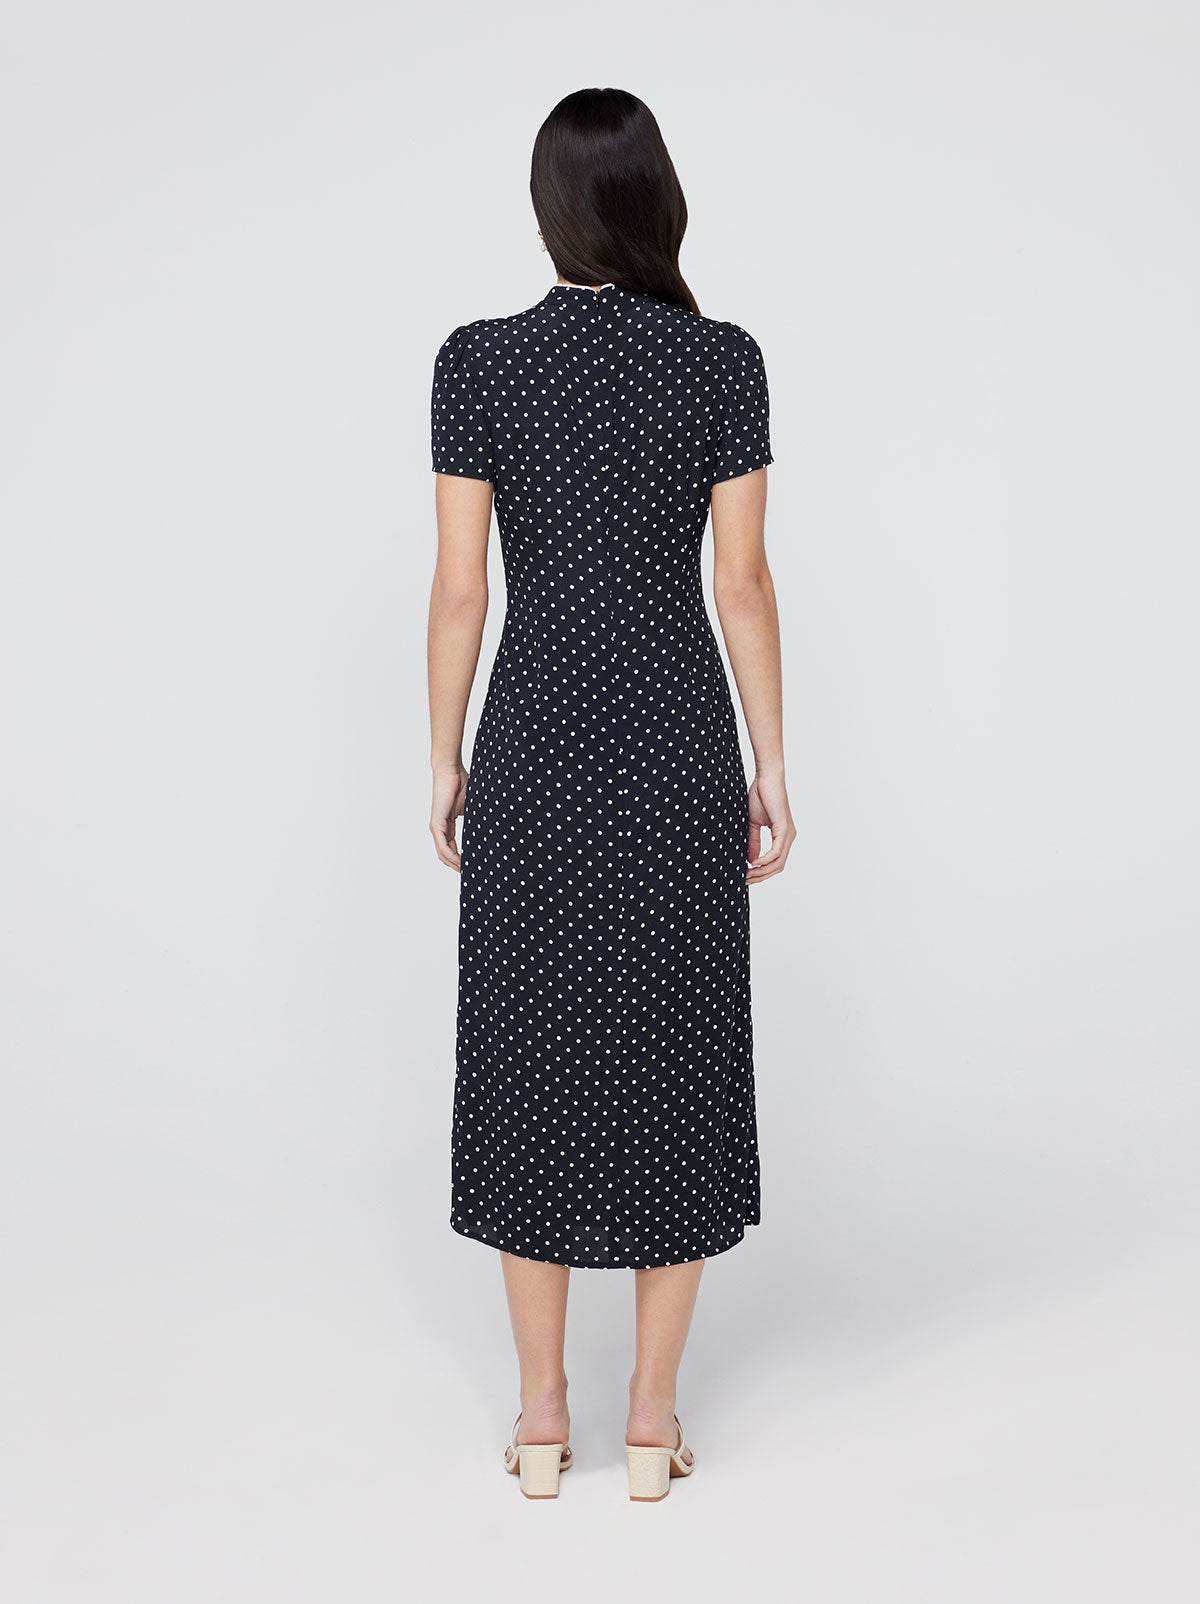 Leia Black Polka Dot Midi Dress By KITRI Studio